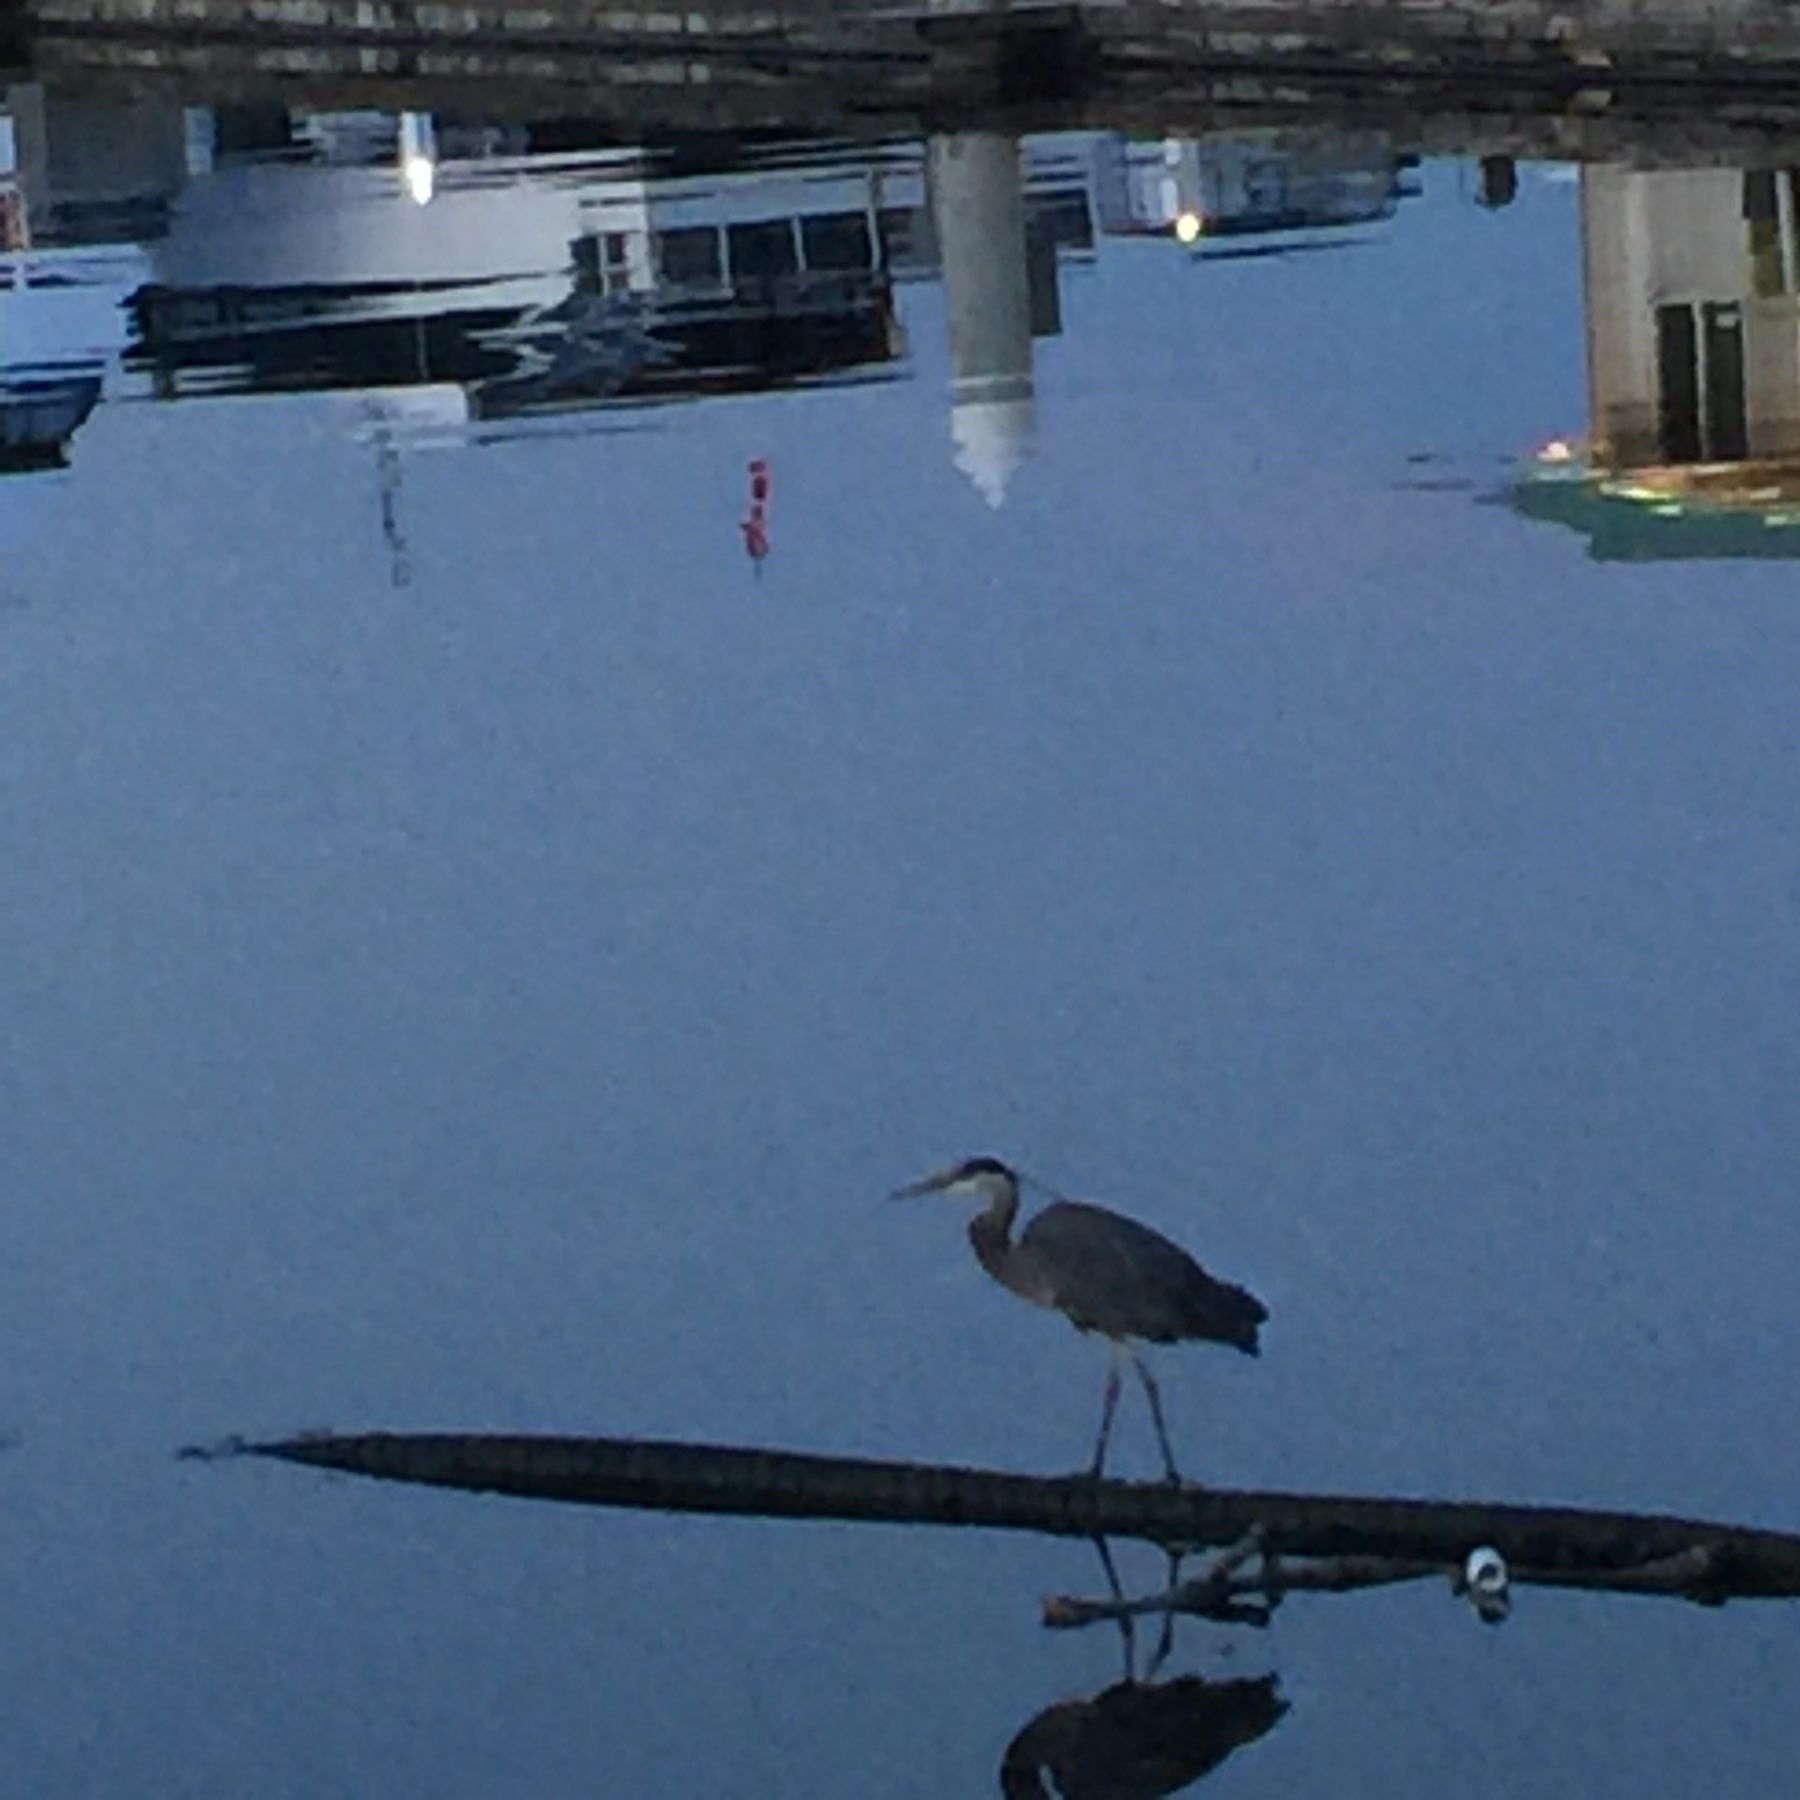 Heron & reflecting water in marina